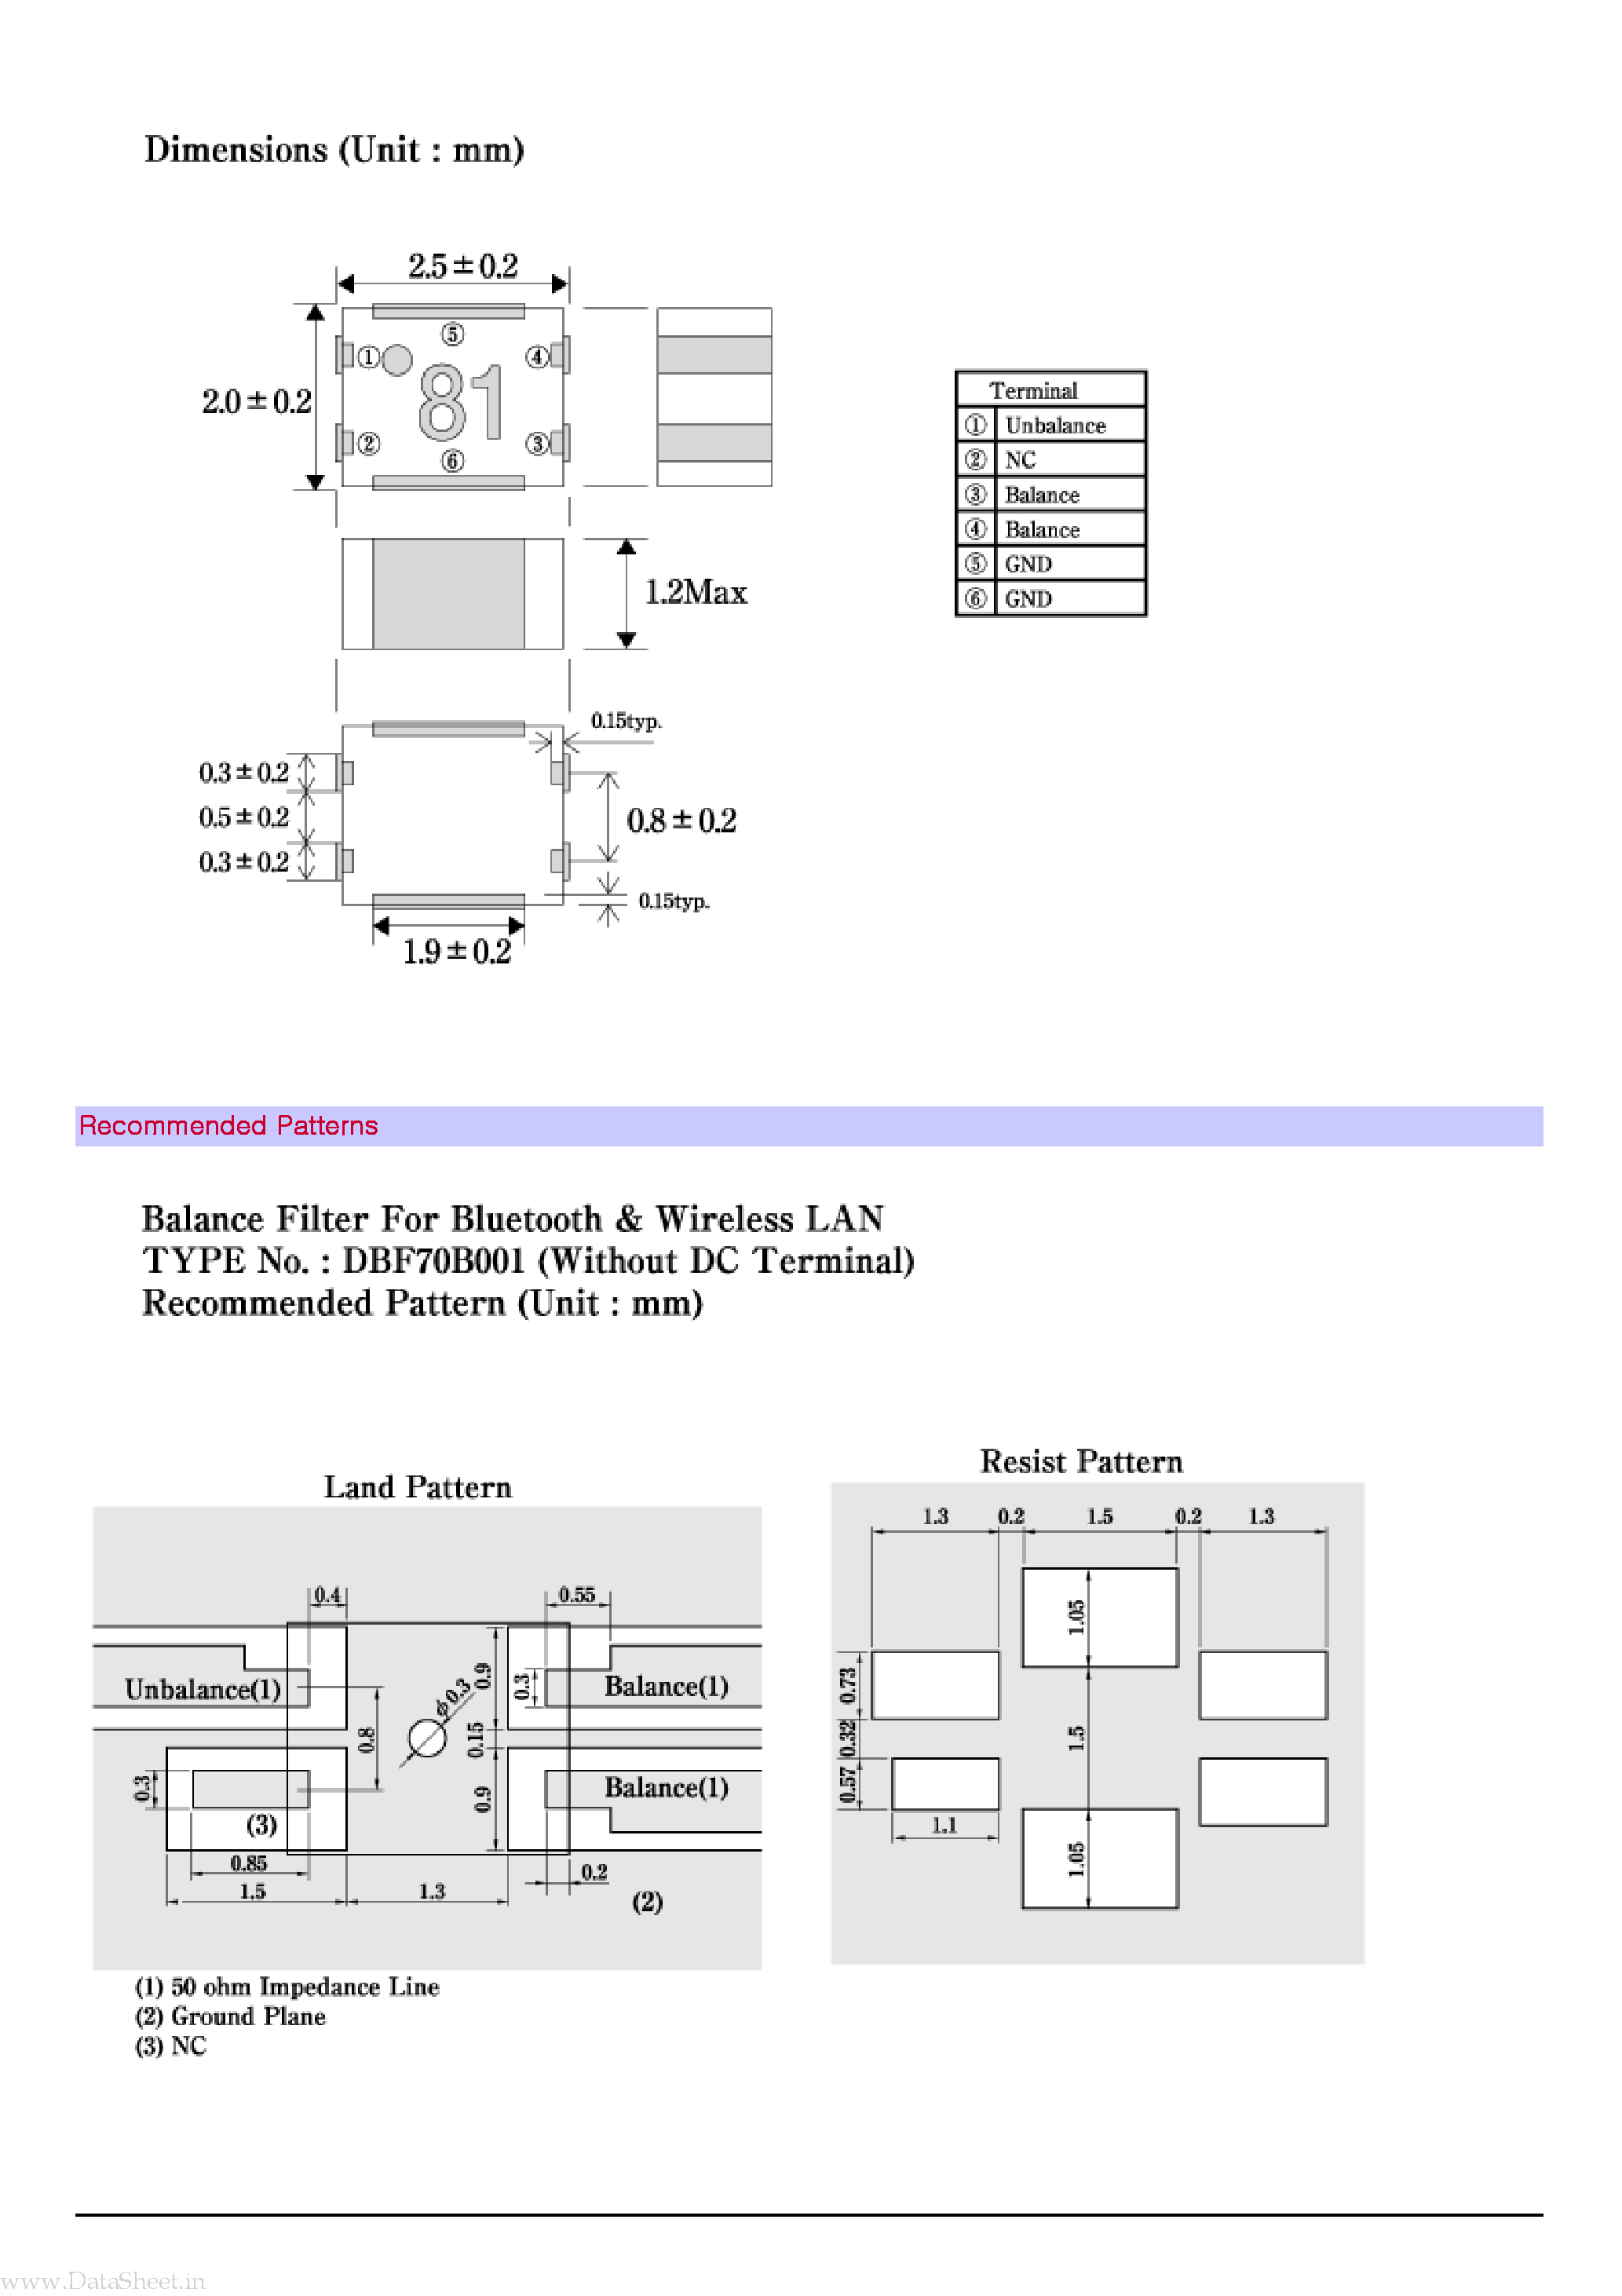 Datasheet DBF70B001 - 2.4GHz Wireless LAN & Bluetooth page 2